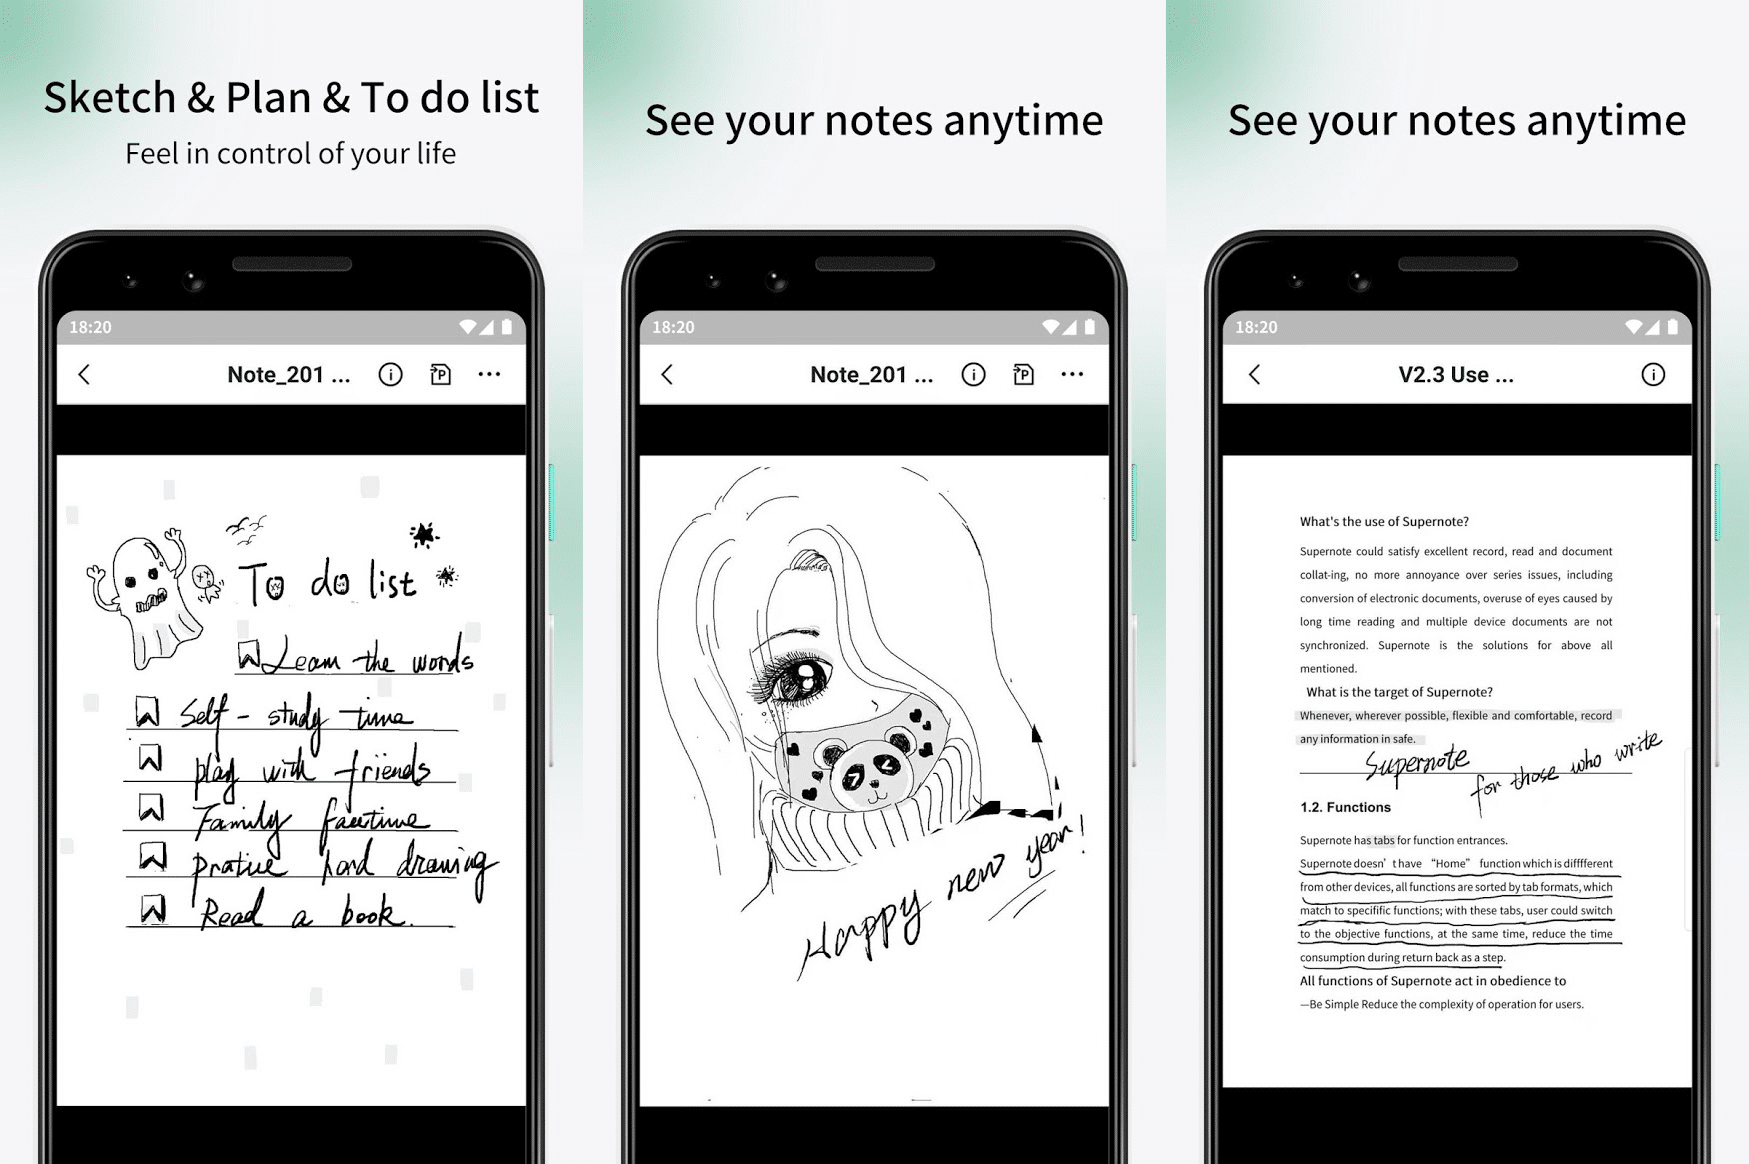 Supernote merilis Aplikasi Android untuk membaca catatan digital Anda